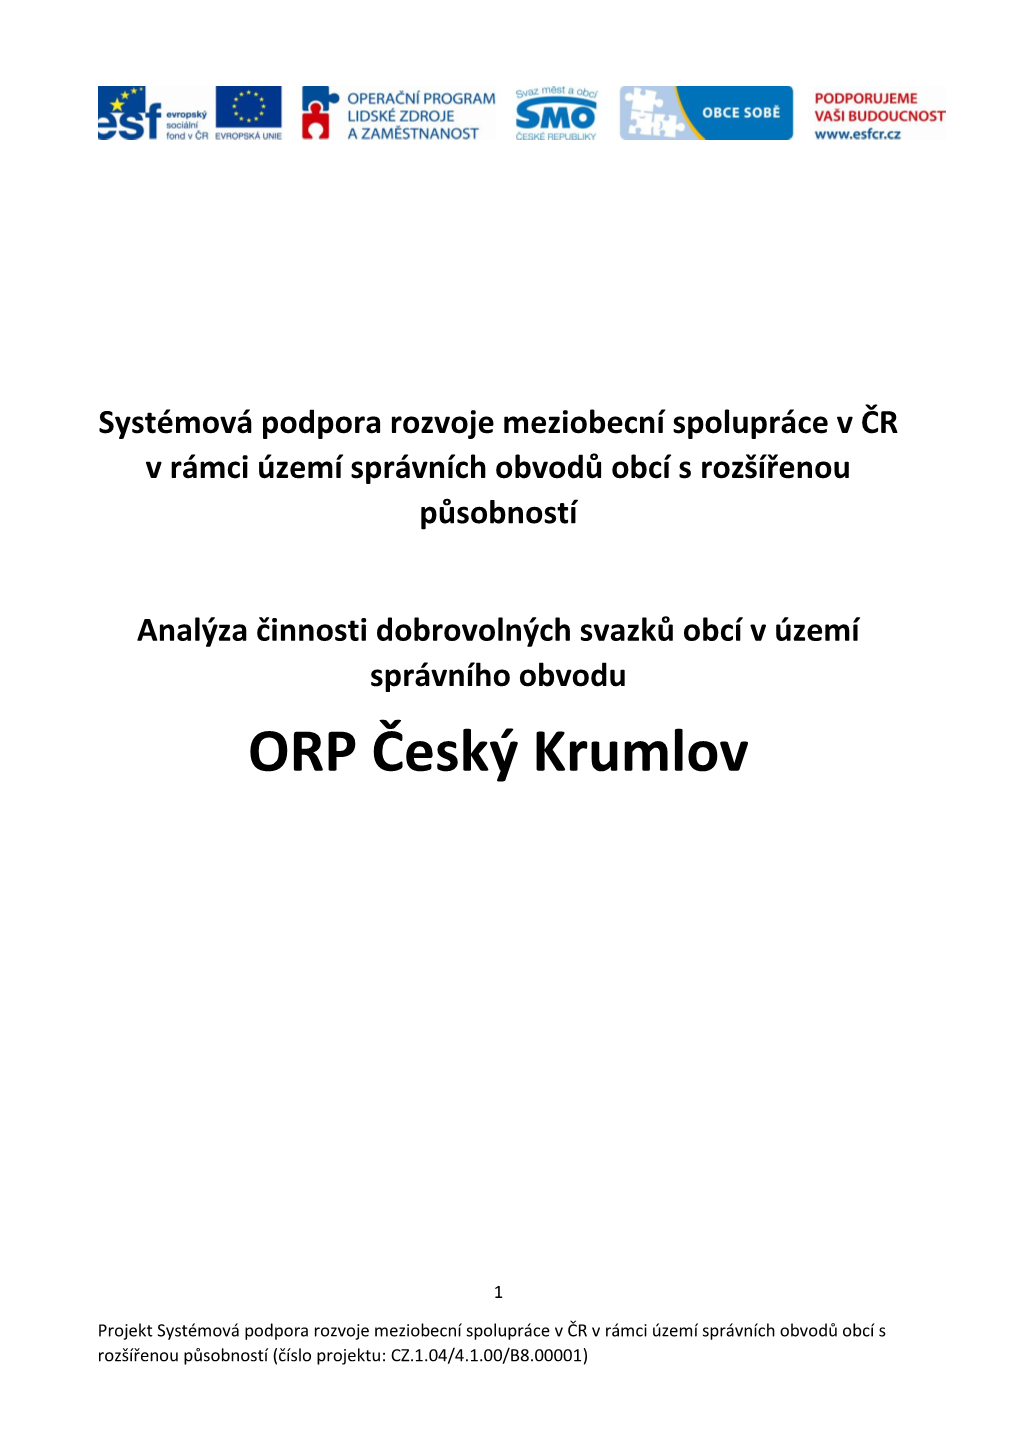 ORP Český Krumlov